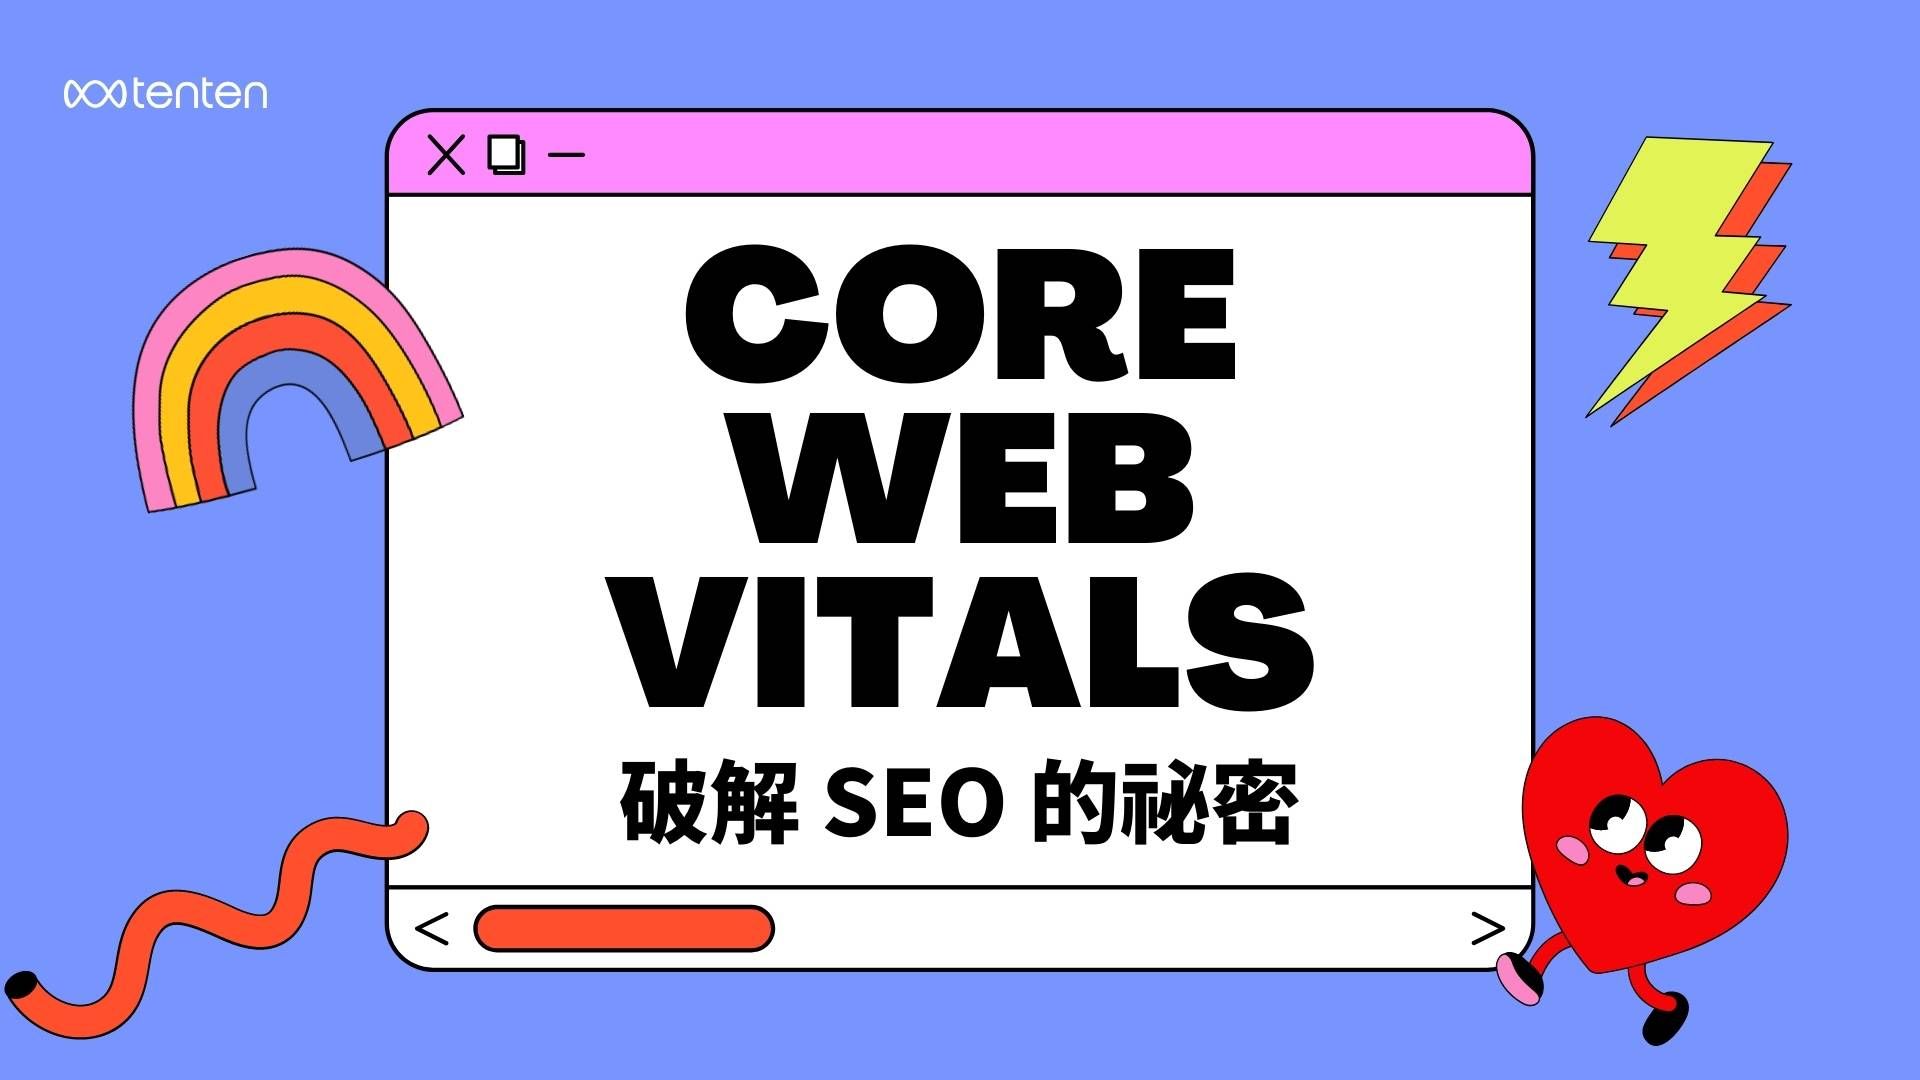 破解 SEO 的祕密: Core Web Vitals